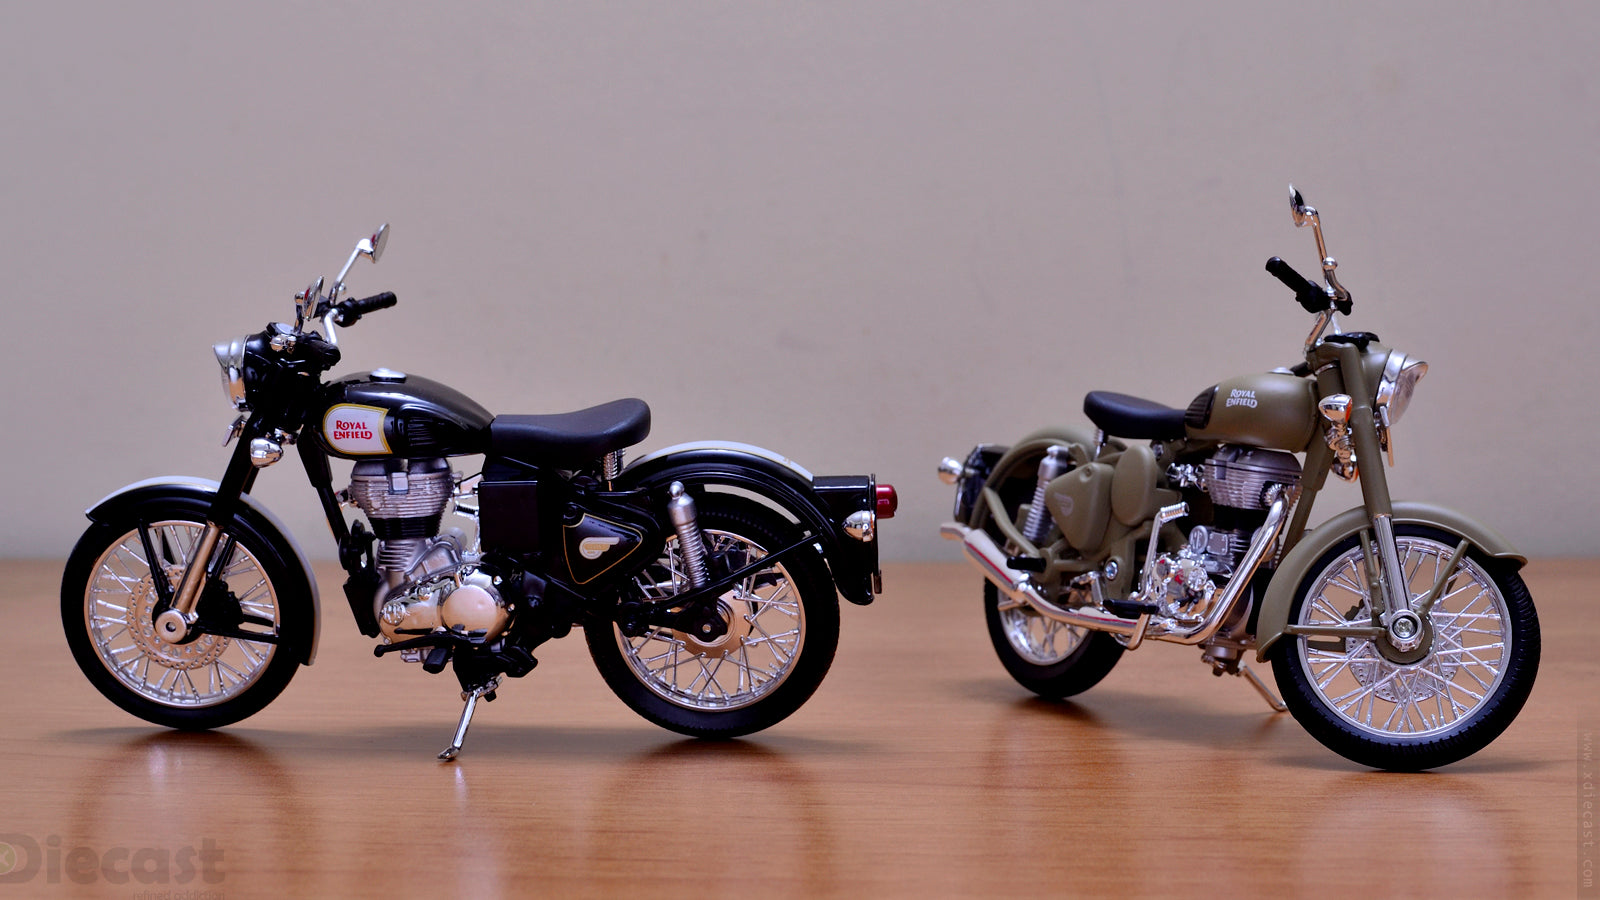 Bullet Bike Toy Scale Model for Kids